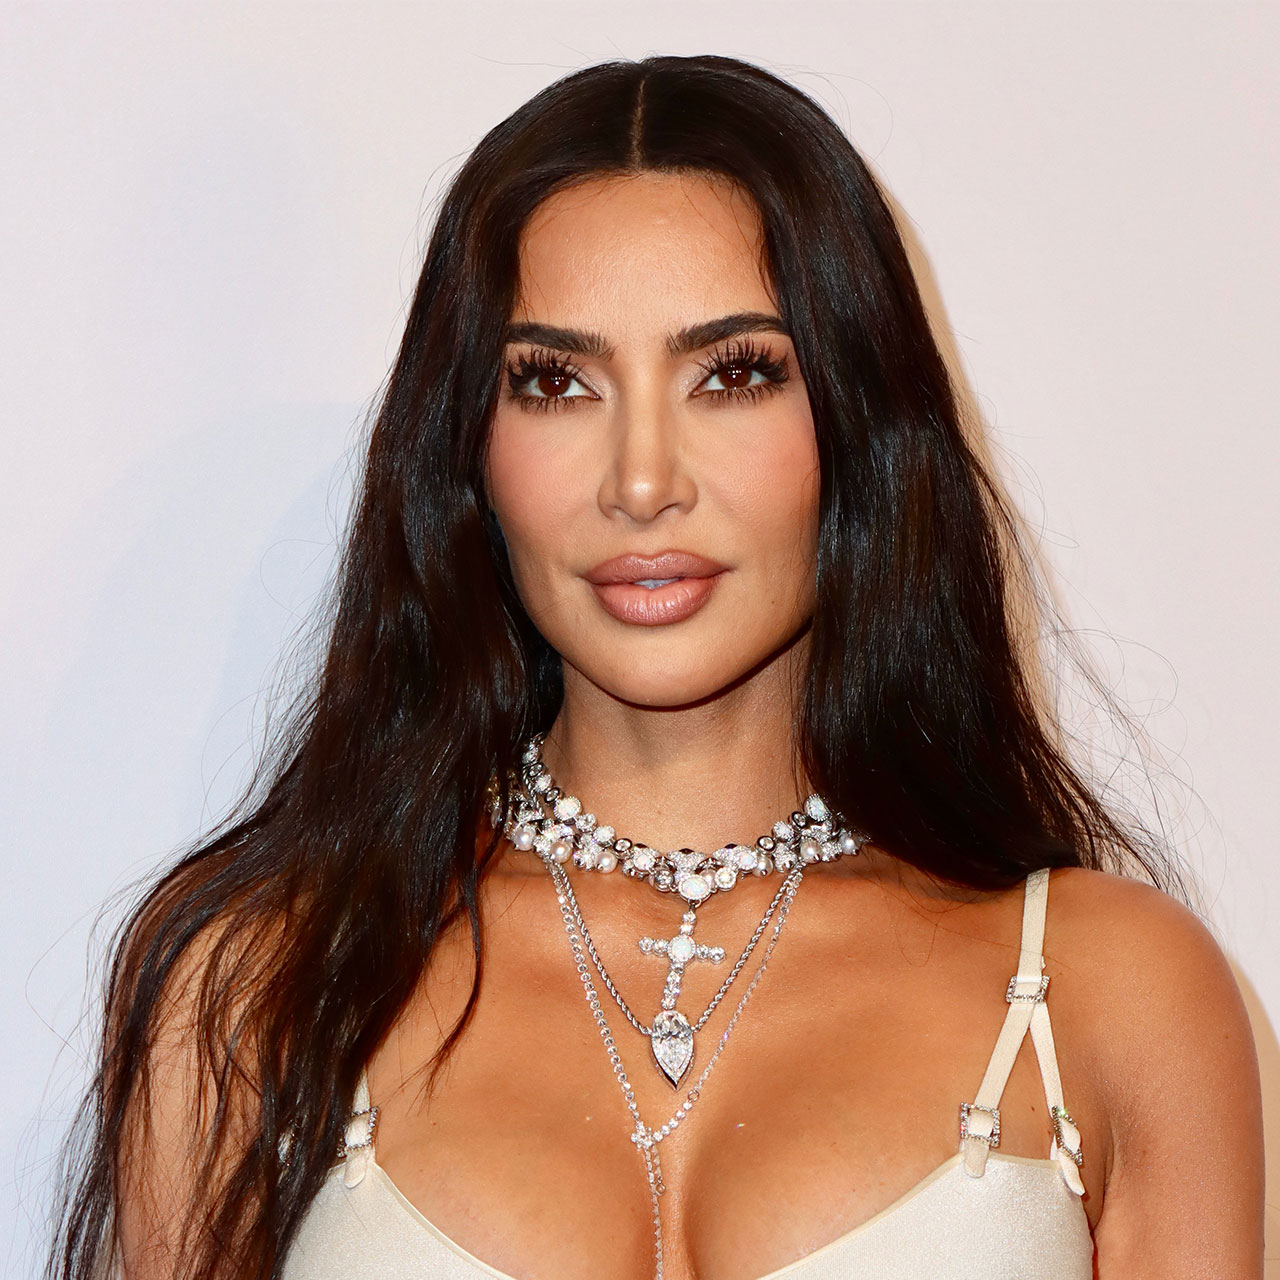 Kim Kardashian's 'Fits Everybody' Micro Thong Slammed For Being